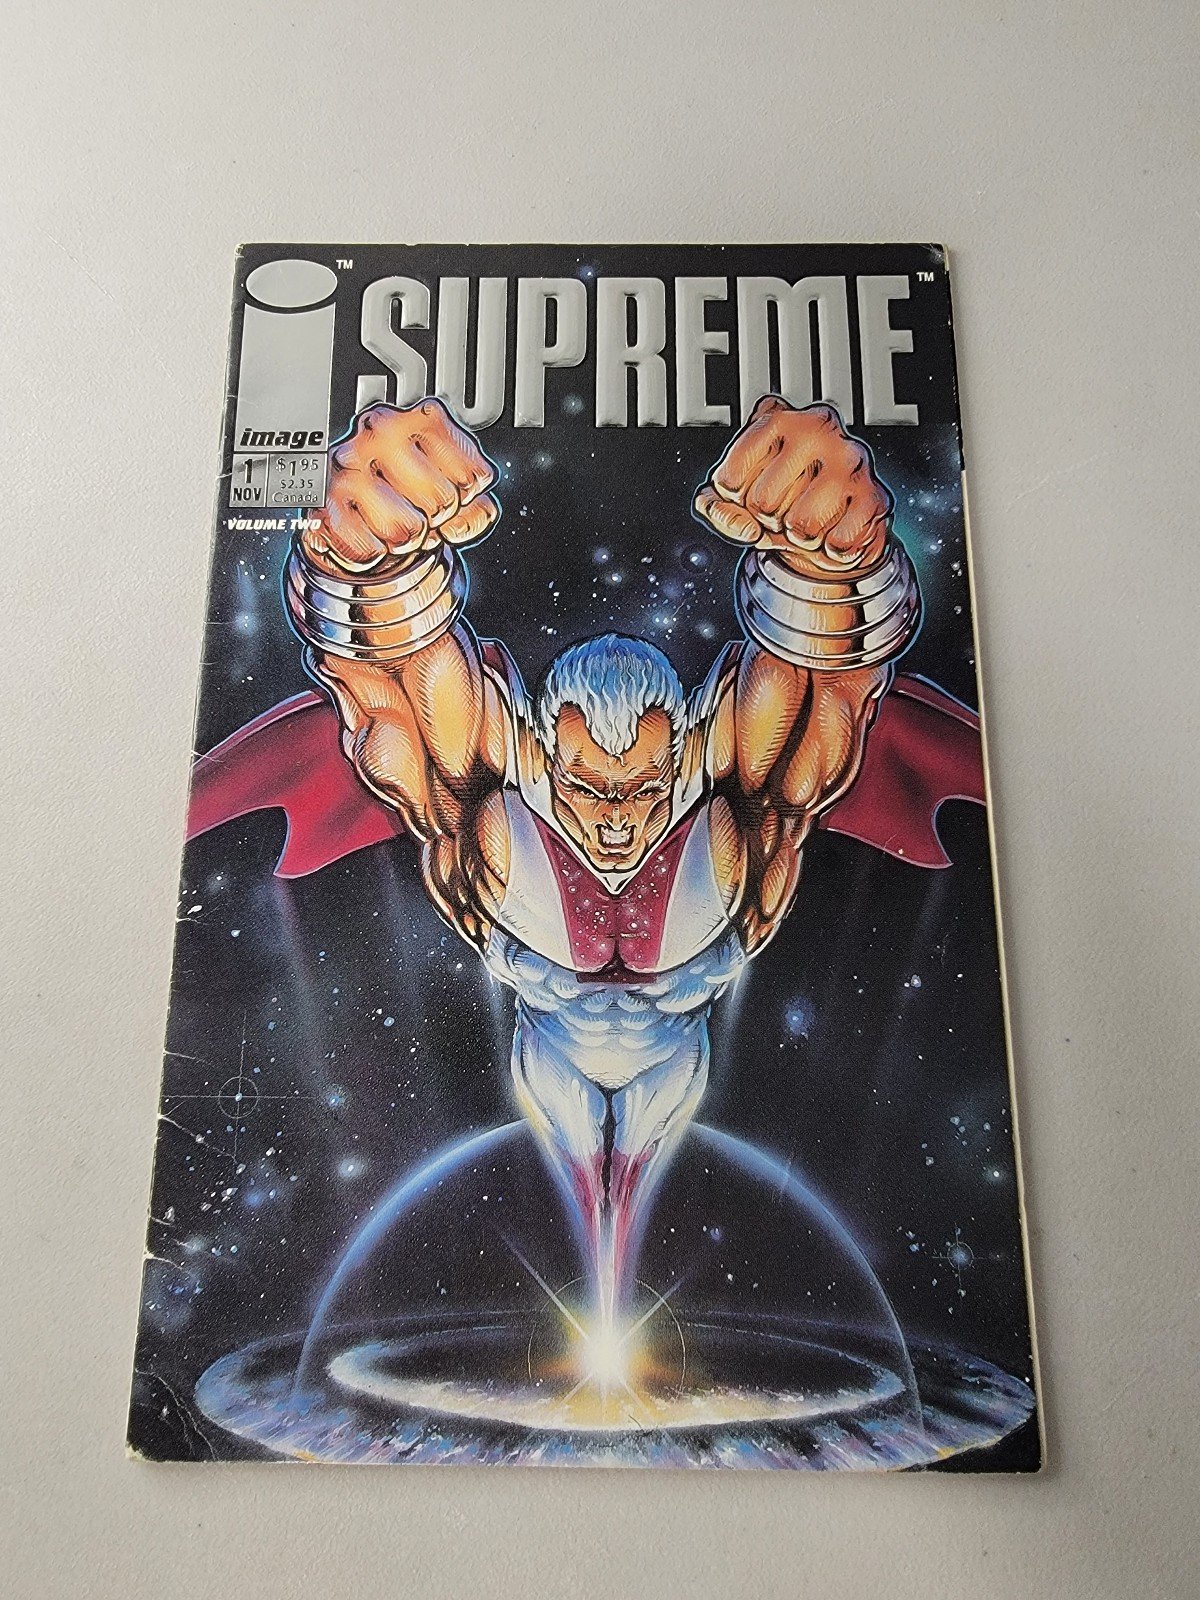 Supreme Vol. 2 No. 1 November 1992 First Printing Collectible Image Comic Book 6XcWy57Sk